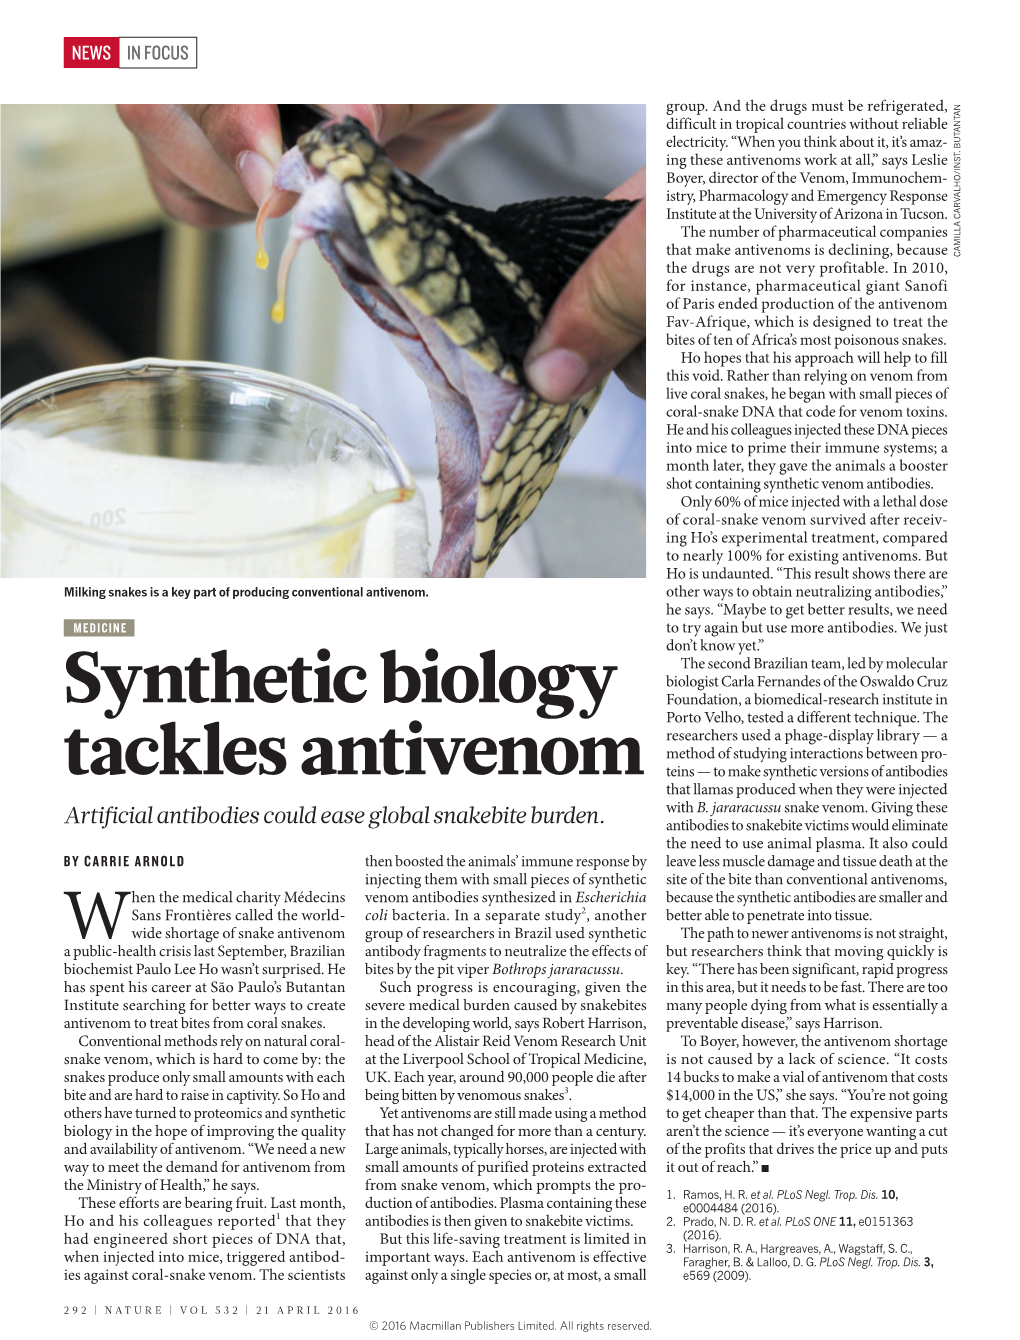 Synthetic Biology Tackles Antivenom